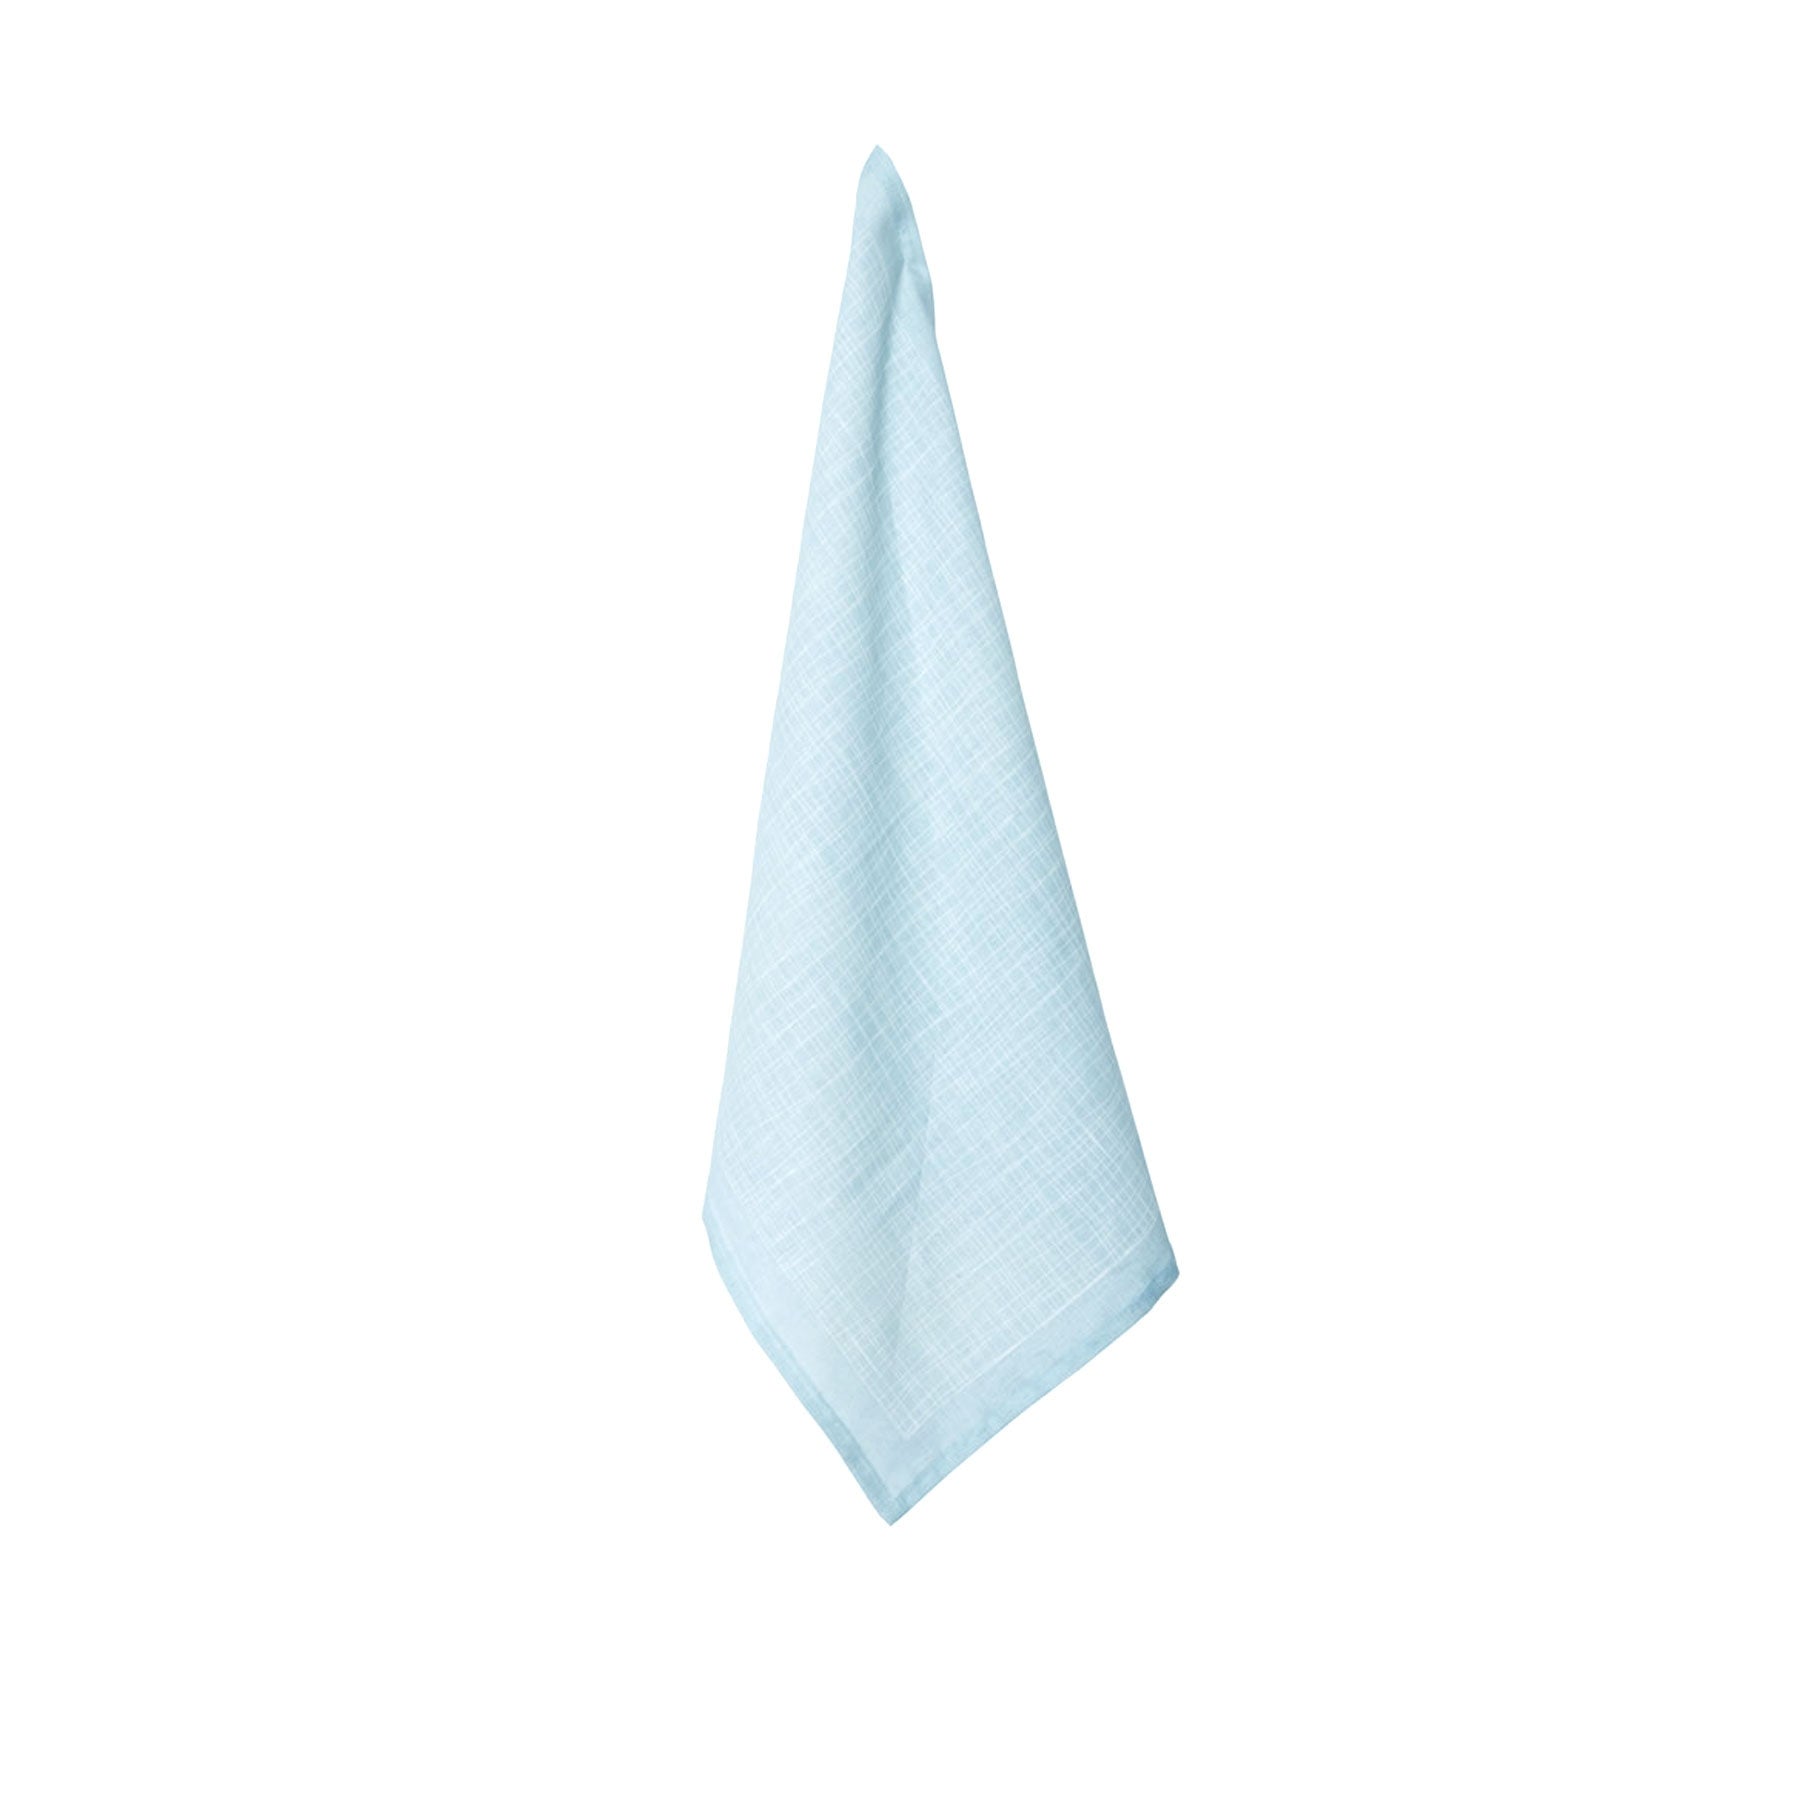 J.Elliot Home 100% Linen Print Tea Towel Verdi Illusion Blue